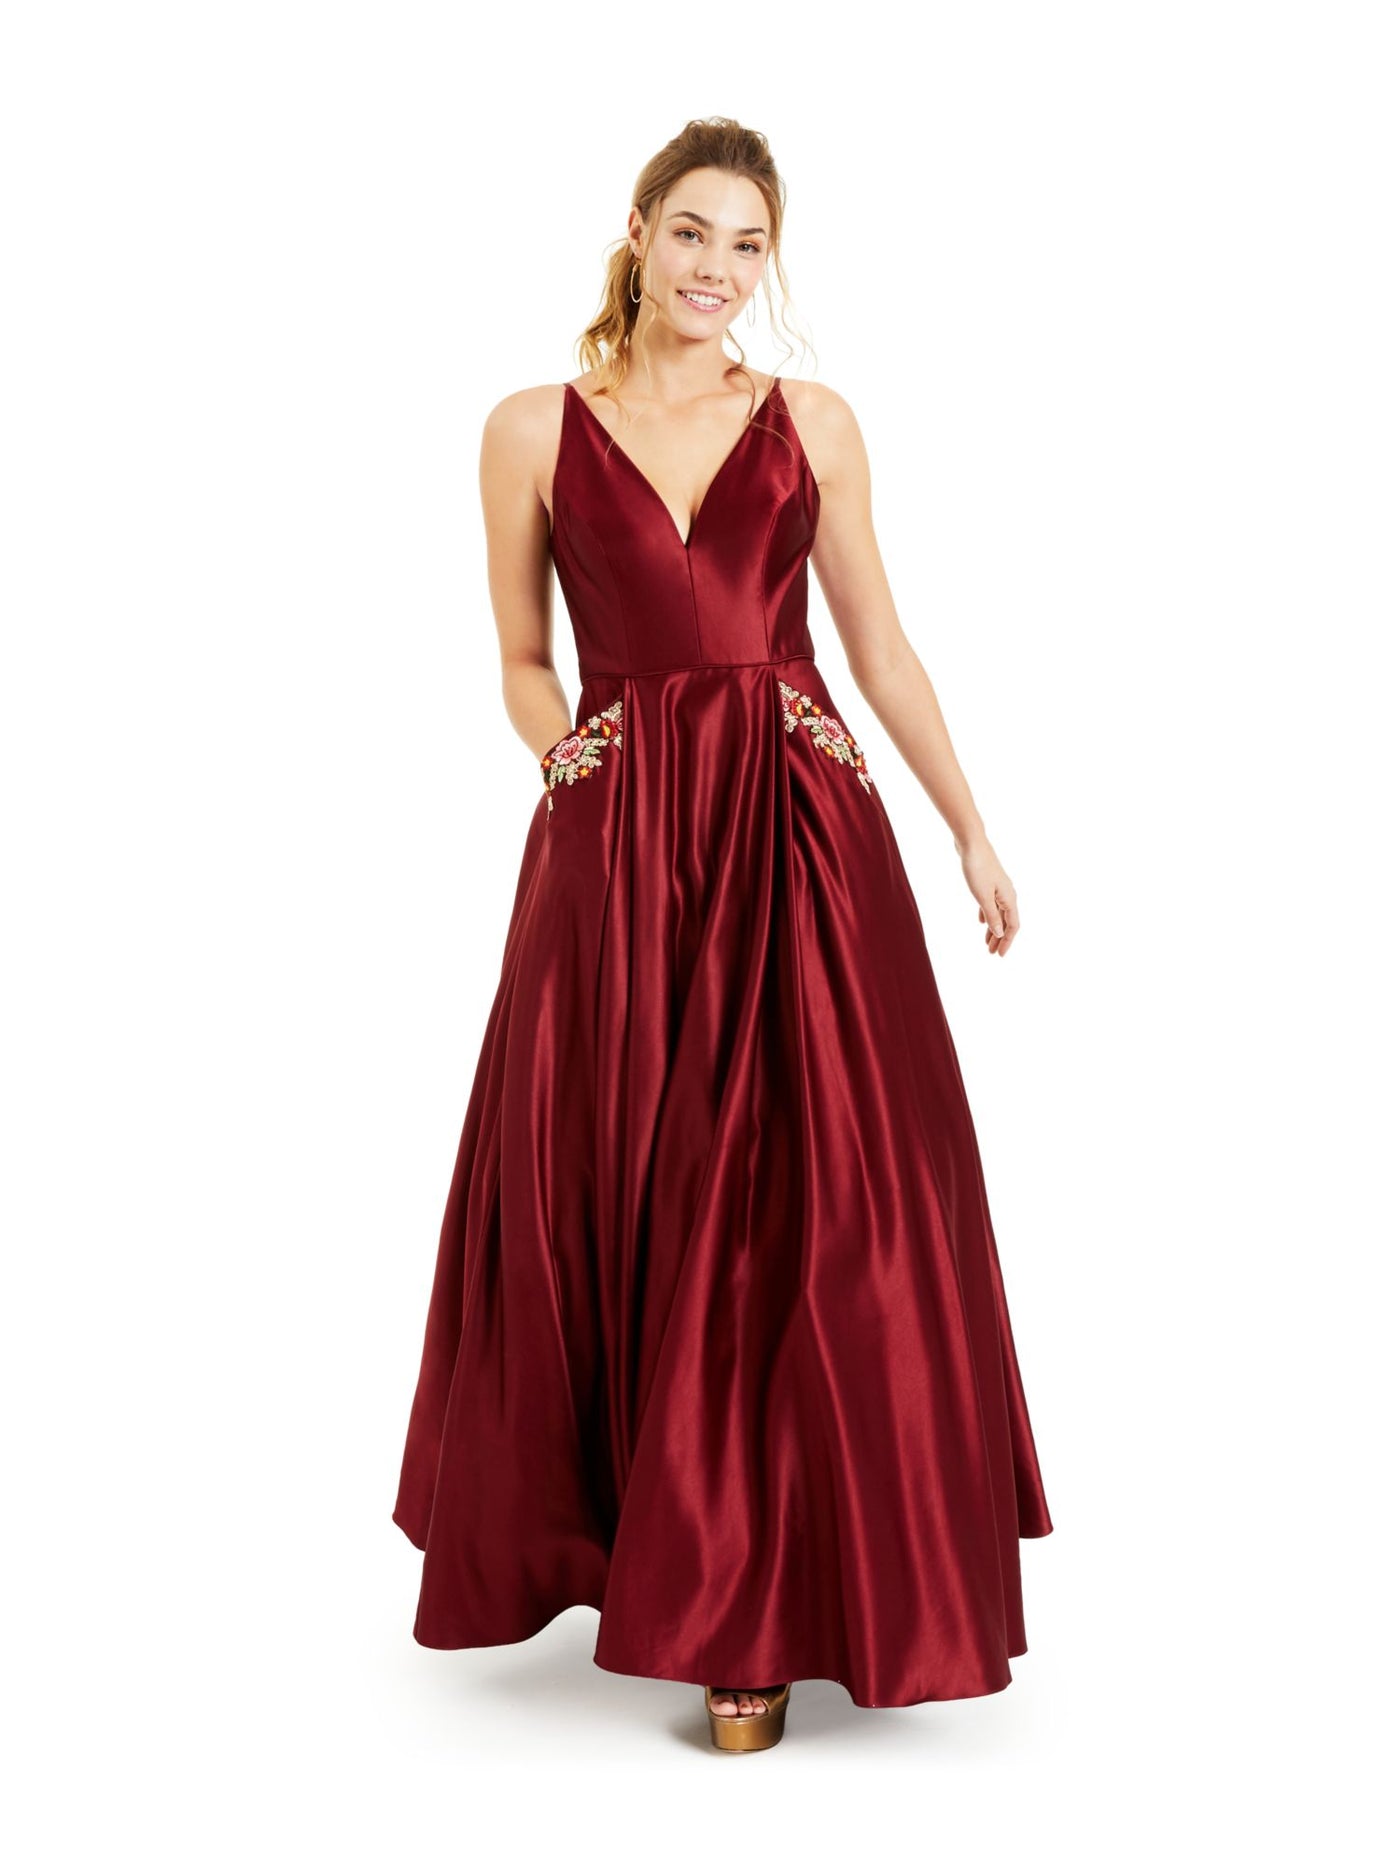 BLONDIE Womens Embellished Pocketed Satin Ballgown Spaghetti Strap V Neck Full-Length Formal A-Line Dress